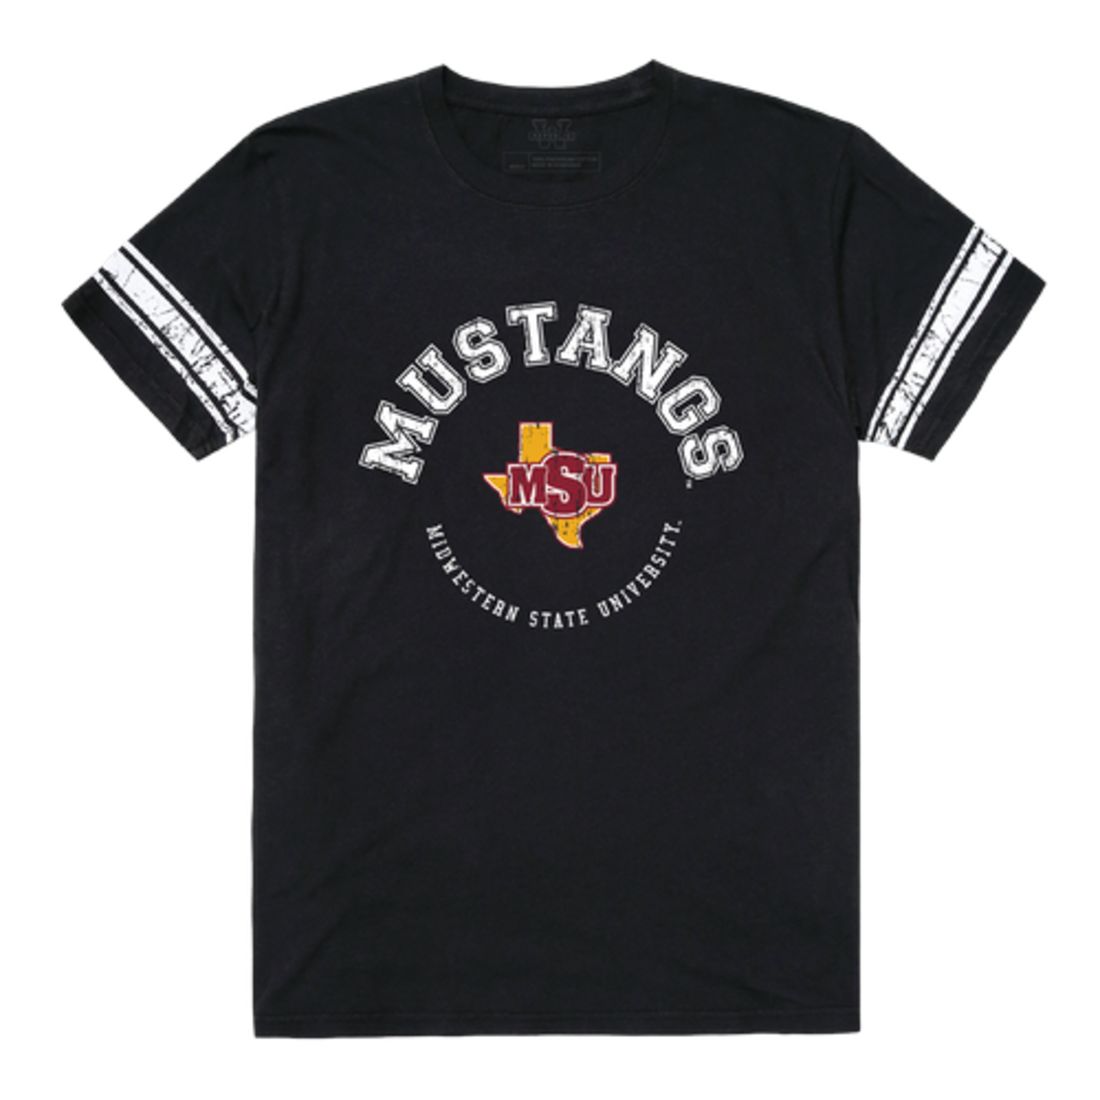 Midwestern State University Mustangs Football T-Shirt Tee